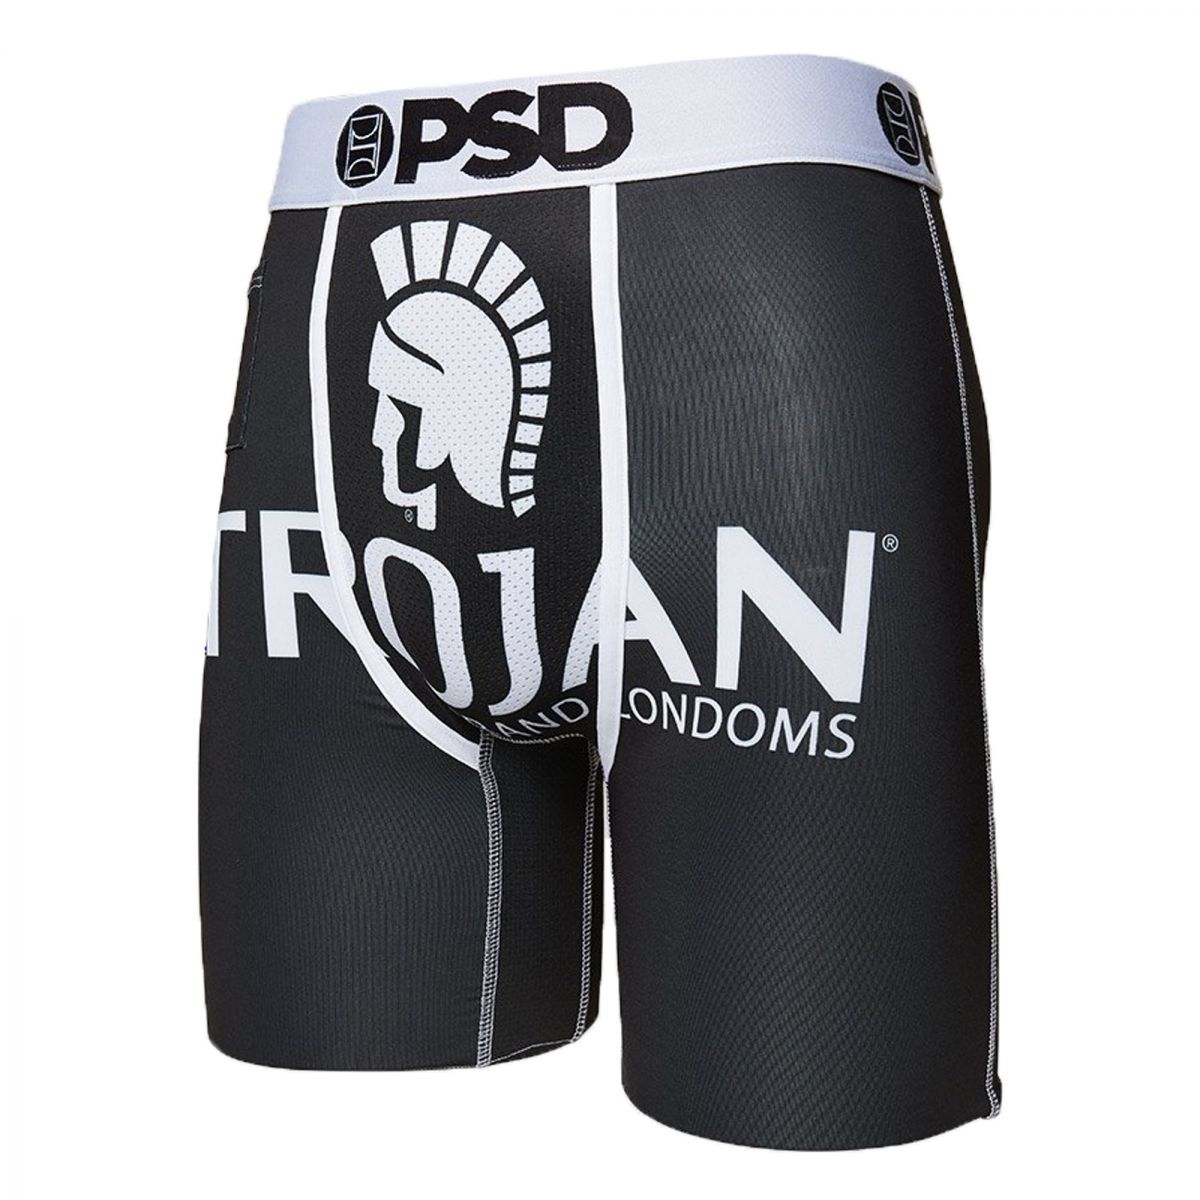 Trojan, Underwear & Socks, Trojan Magnum Boxer Briefs Size M